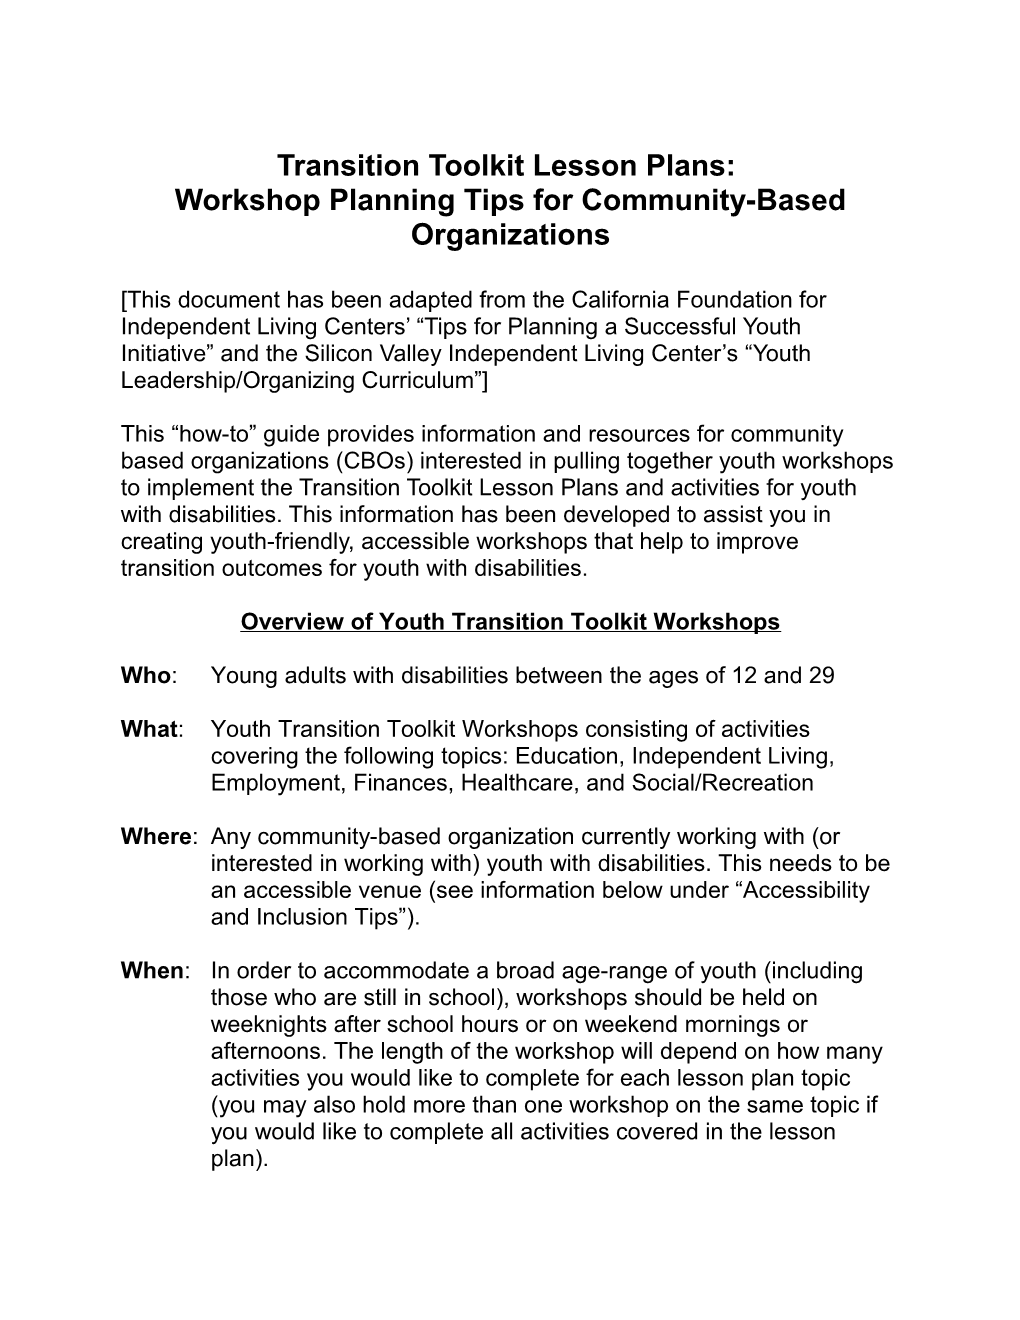 Workshop Planning Tips for Community-Based Organizations